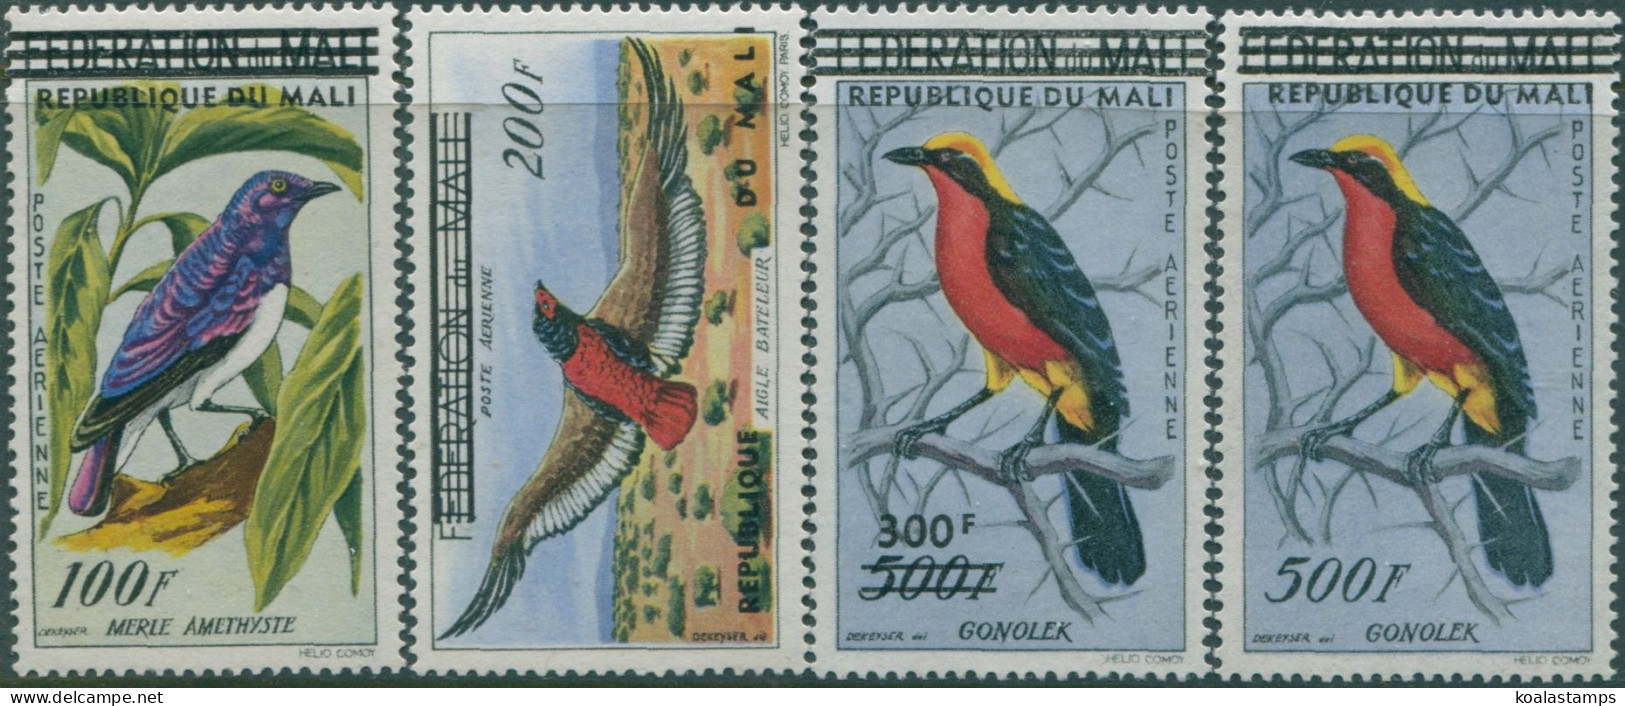 Mali 1960 SG17-20 Birds REPUBLIQUE DU MALI Ovpts MNH - Mali (1959-...)